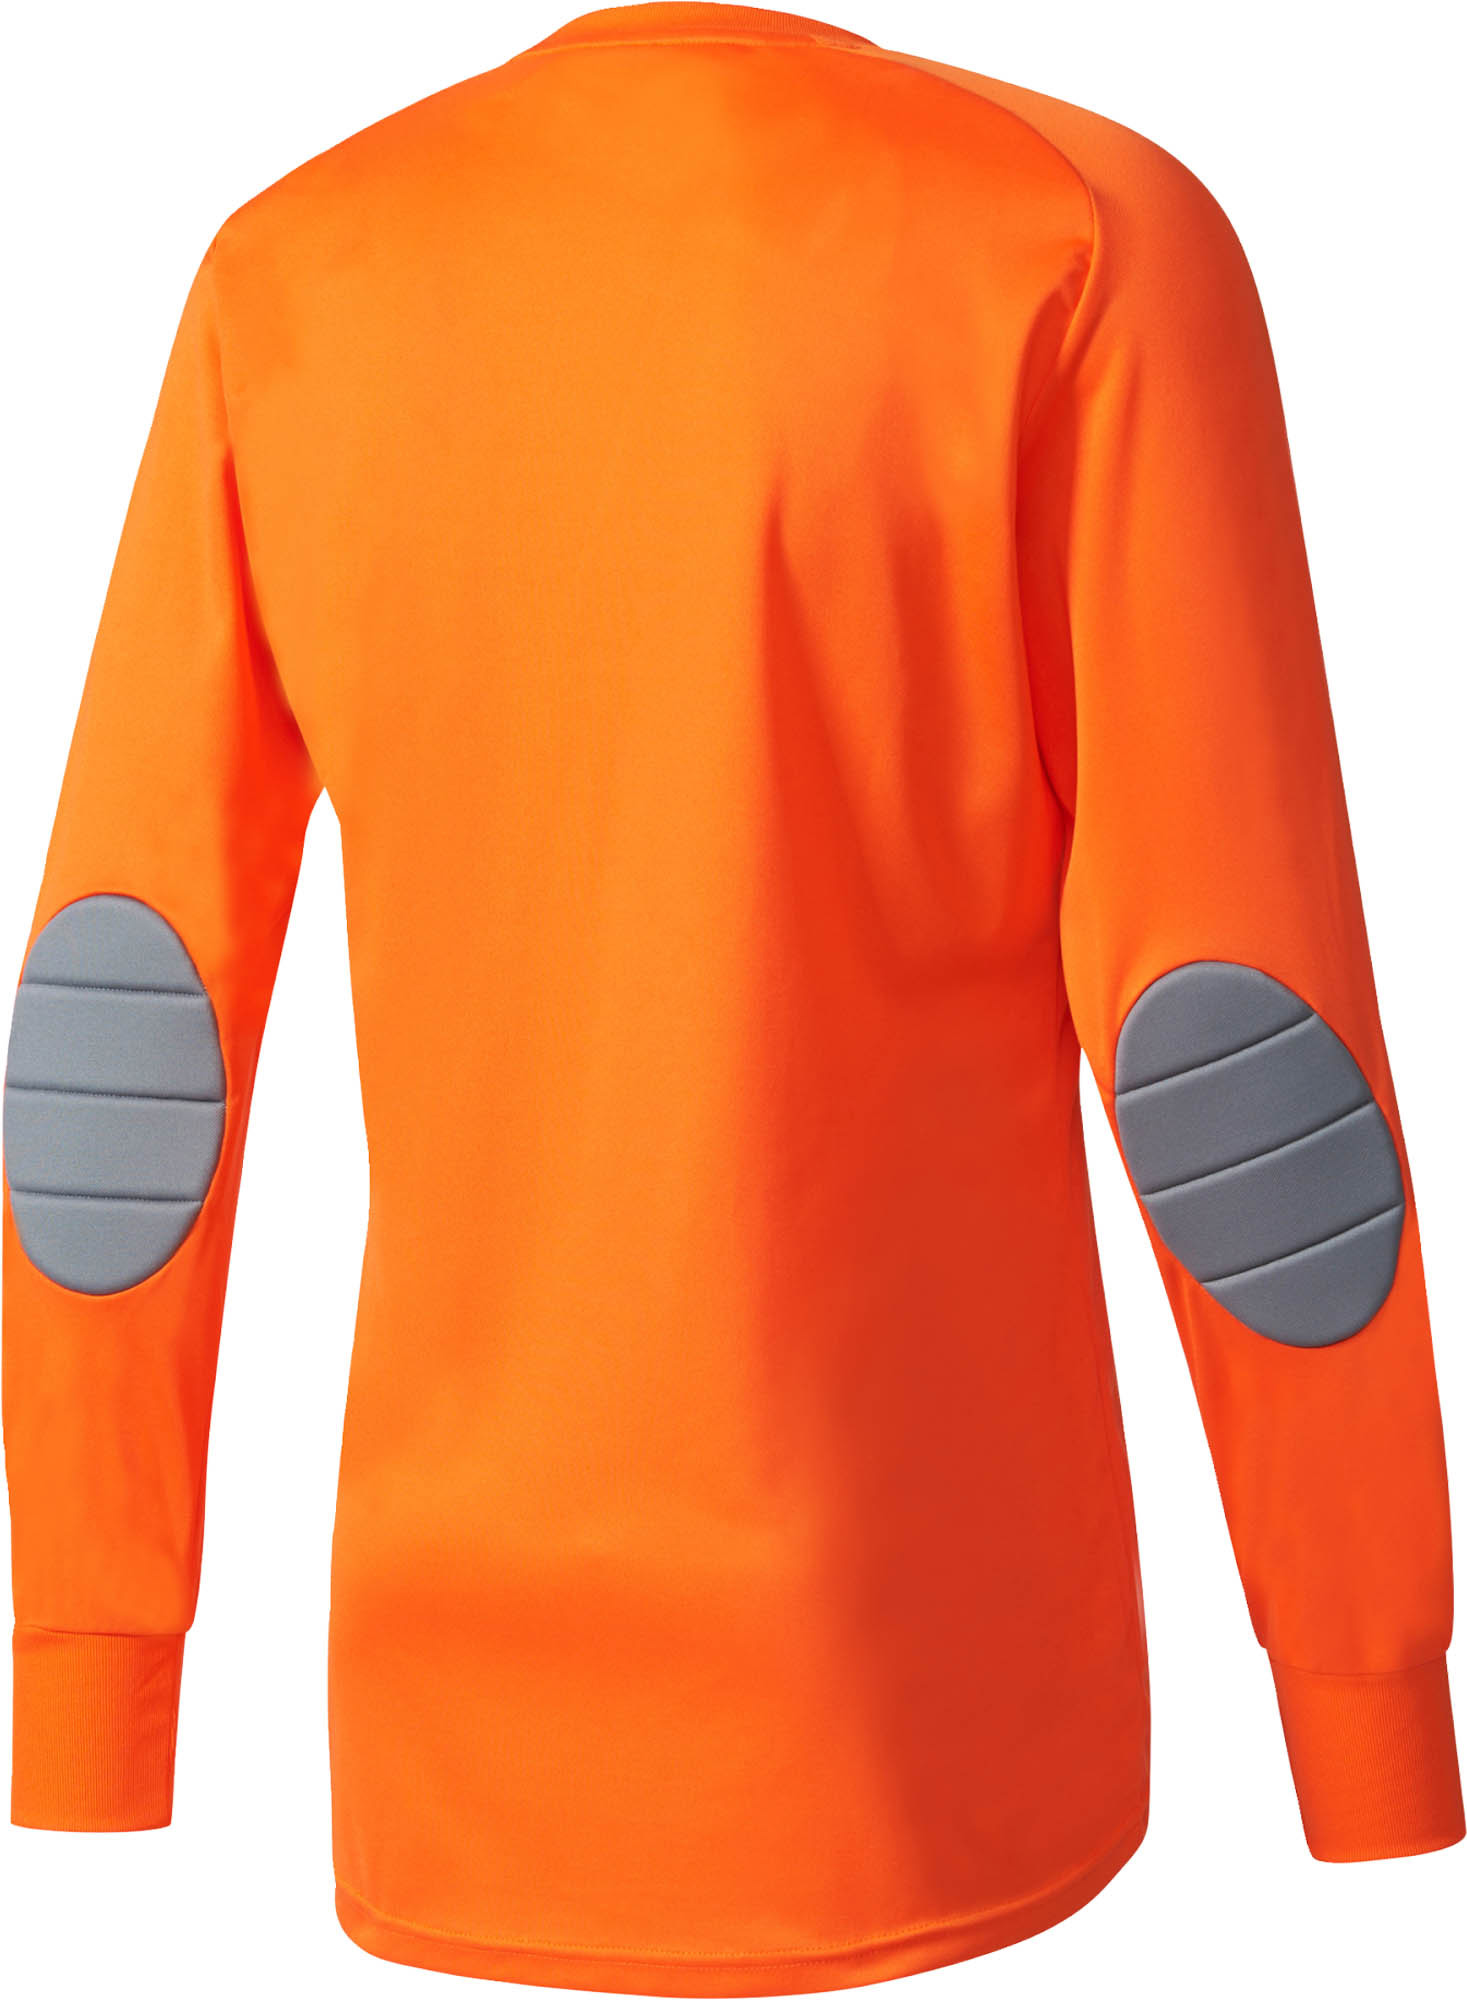 adidas Assita 17 Goalkeeper Jersey - Orange & White